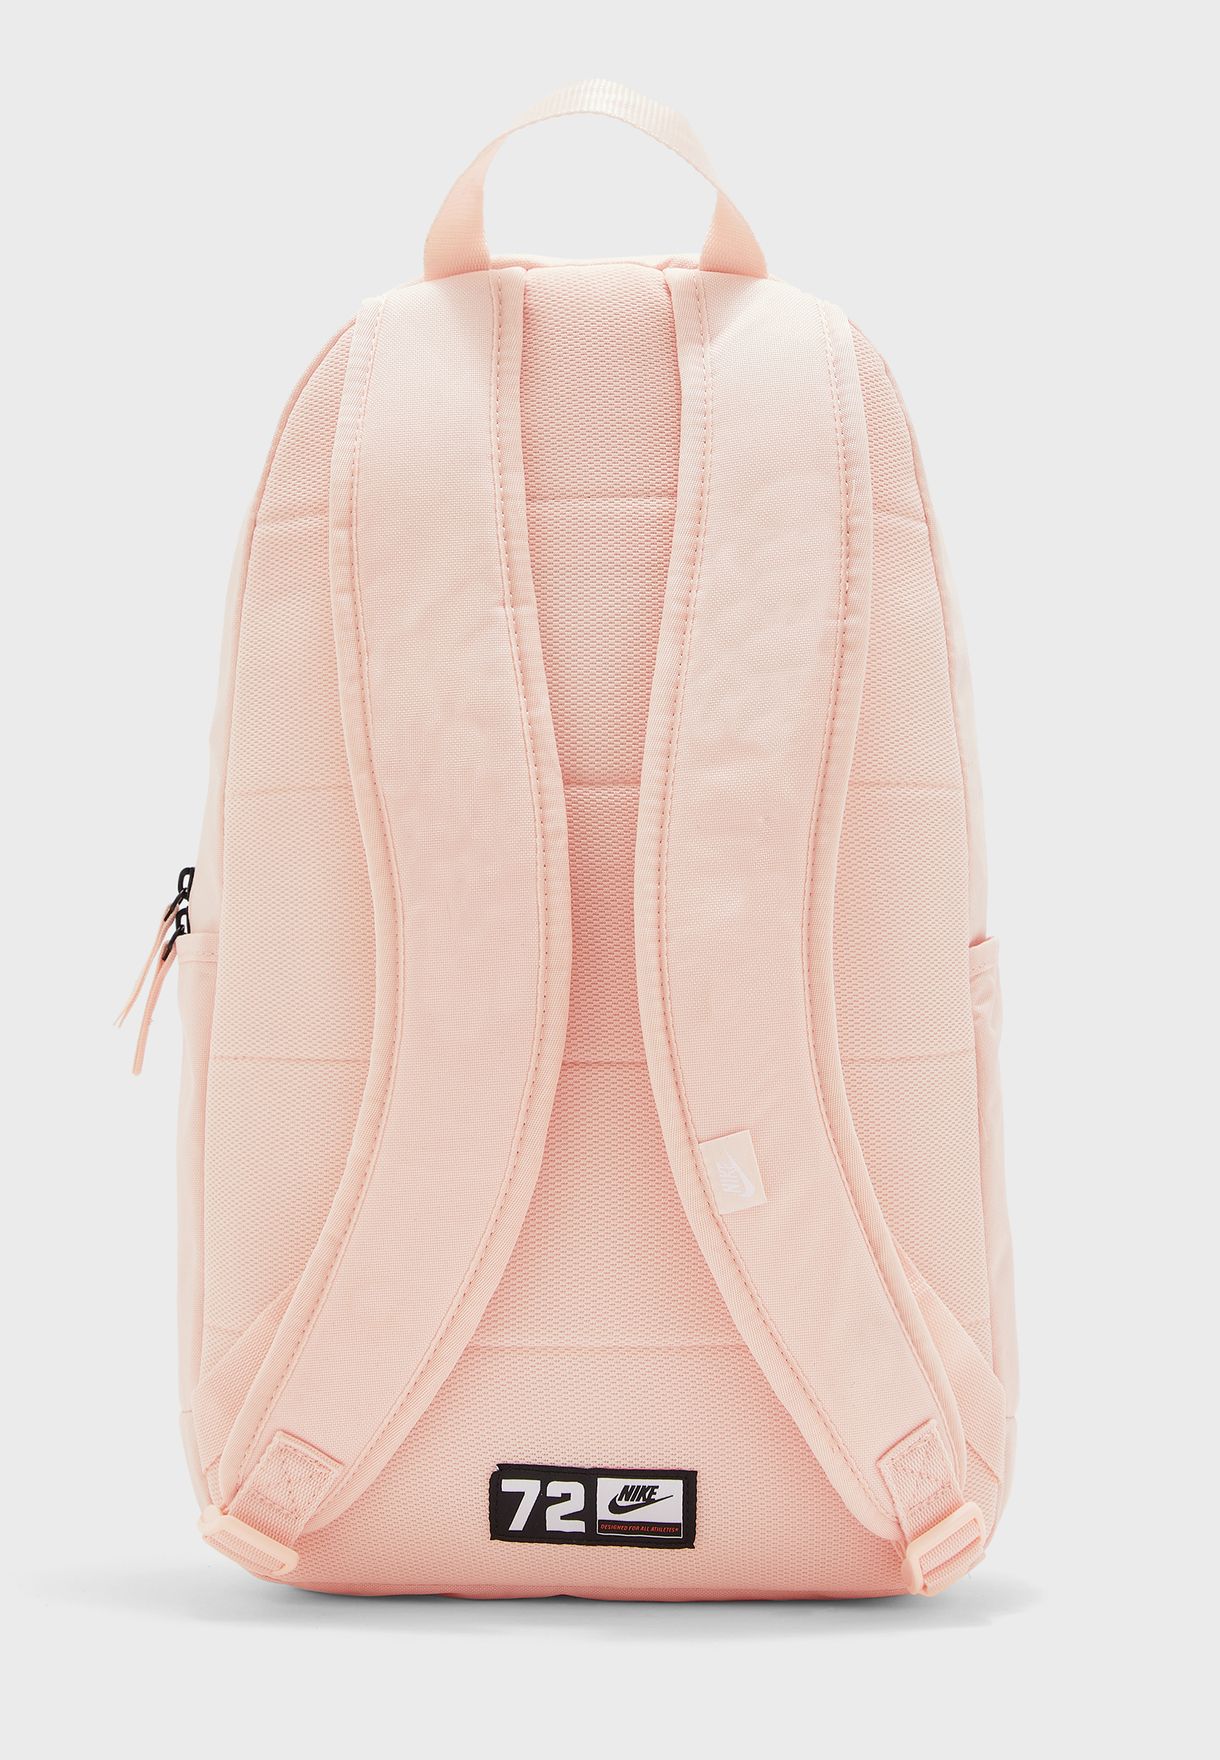 light pink nike backpack